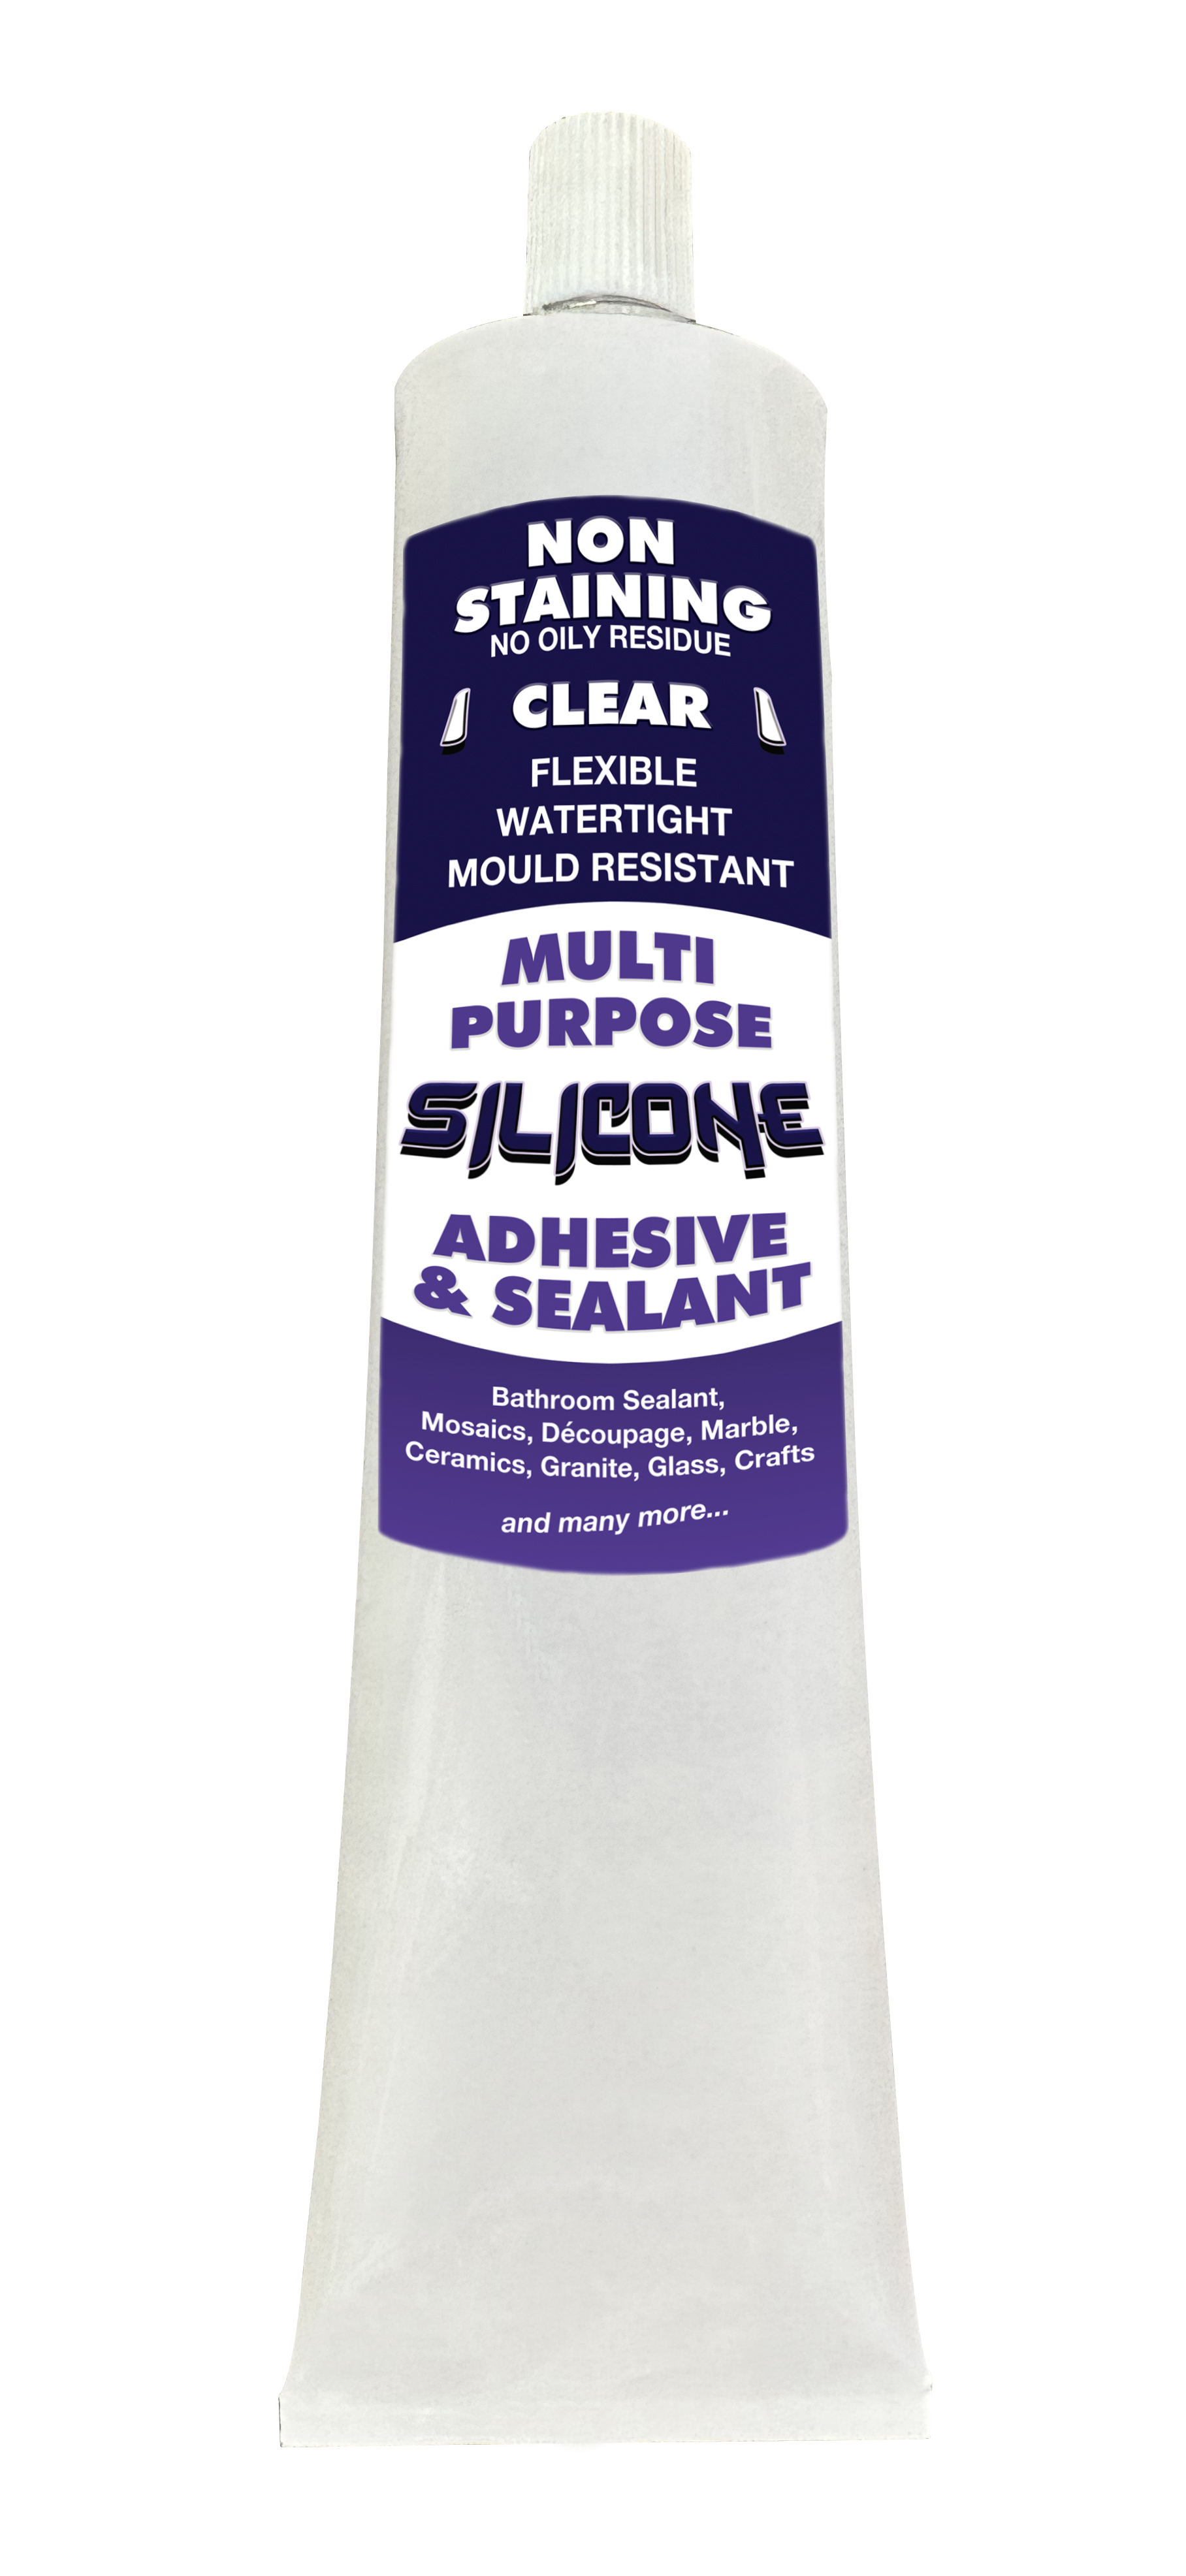 Silicone Adhesive and Sealant